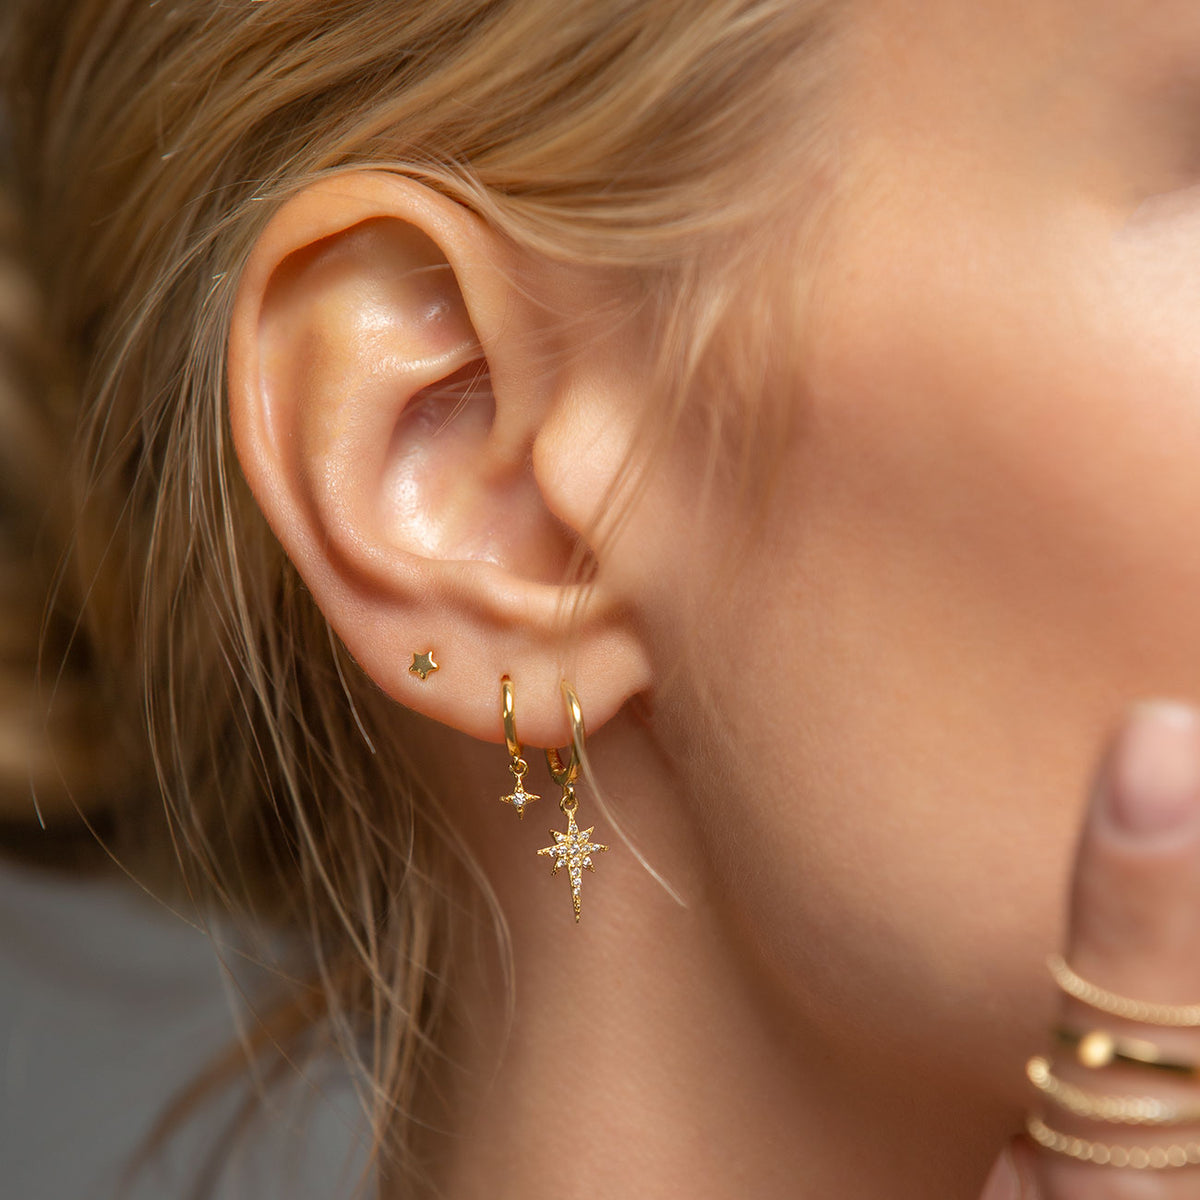 Double piercing earrings, multiple piercing connected earrings